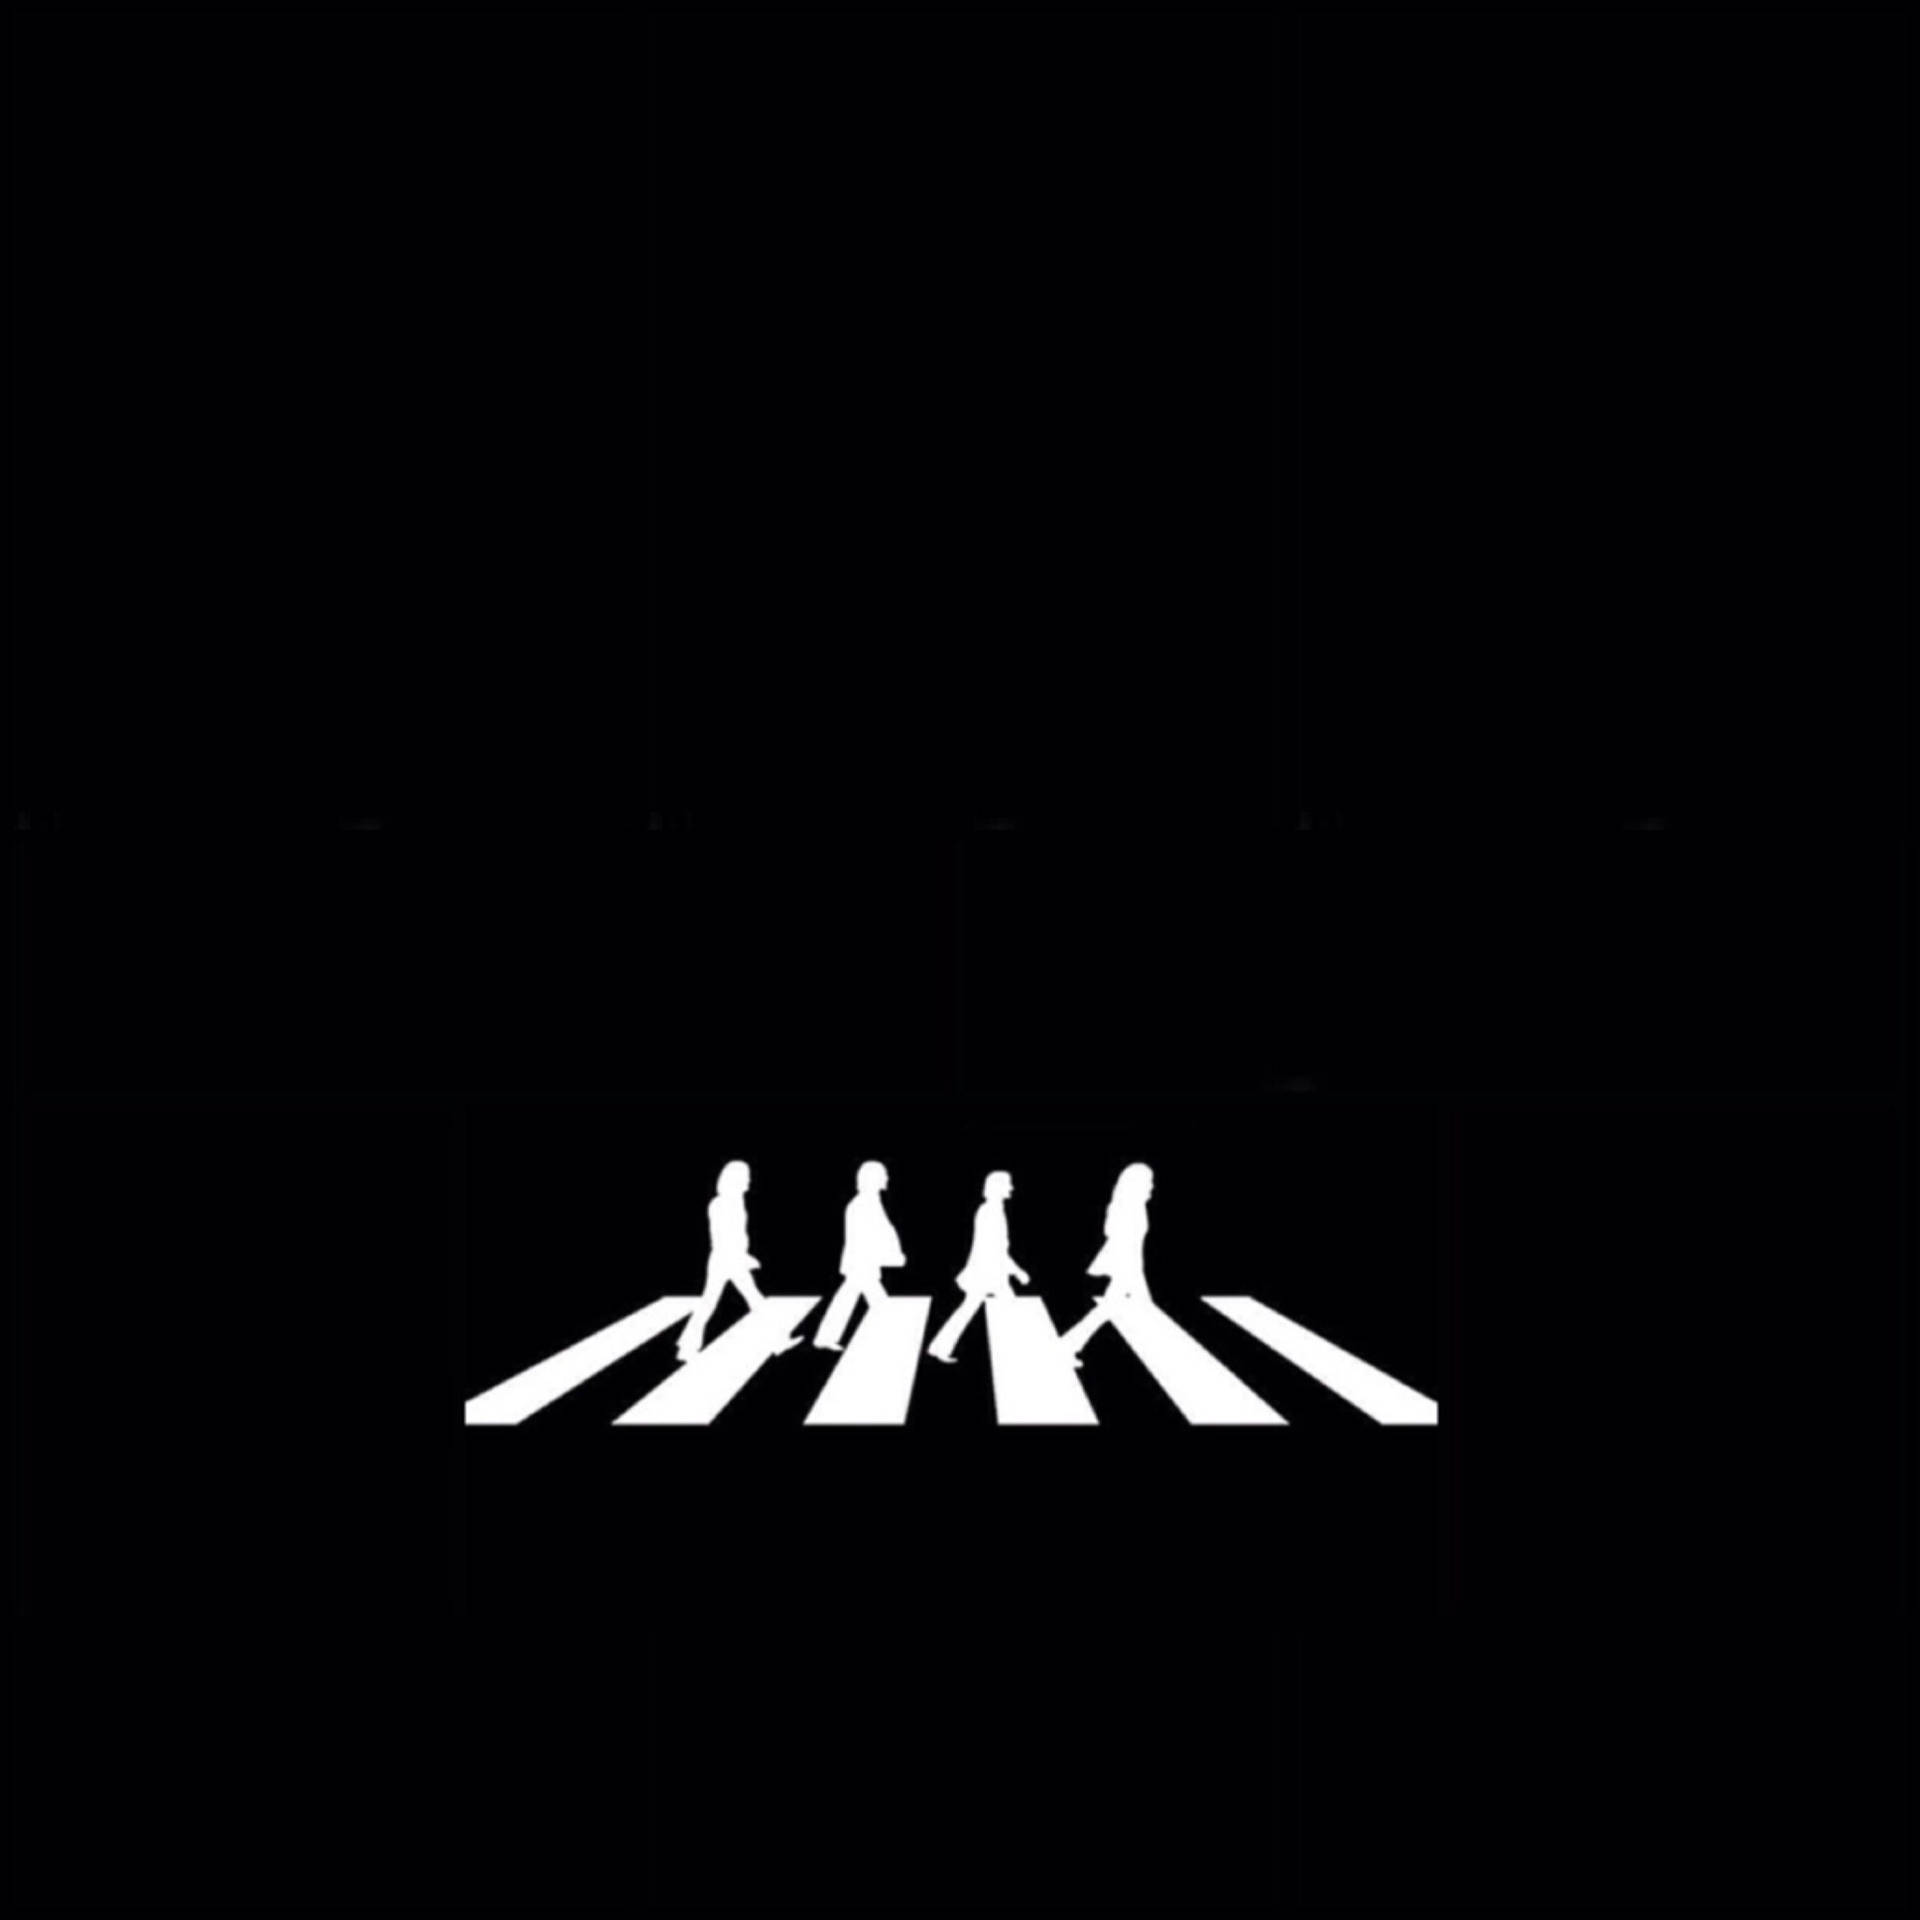 Beatles Minimalist Abbey Road Wallpaper